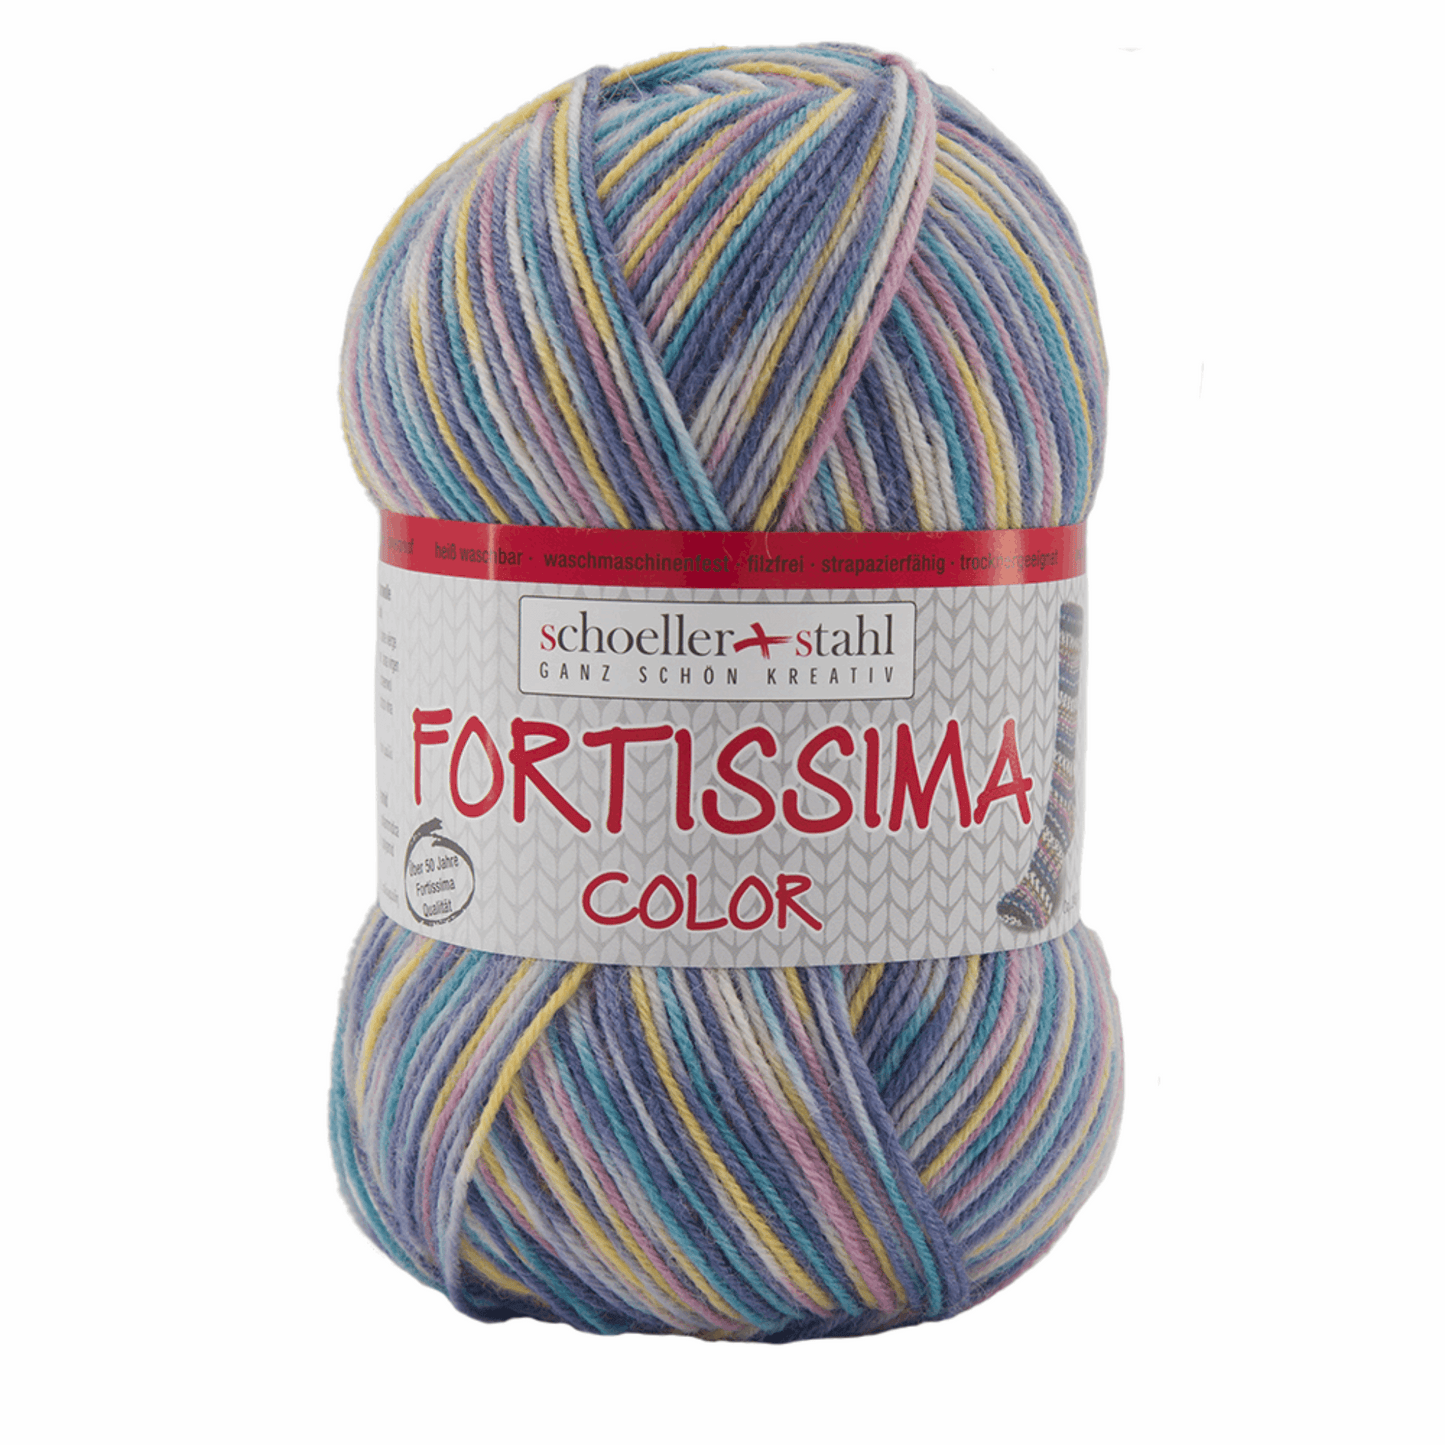 Fortissima socka 4-ply, 90028, color 2411, natural